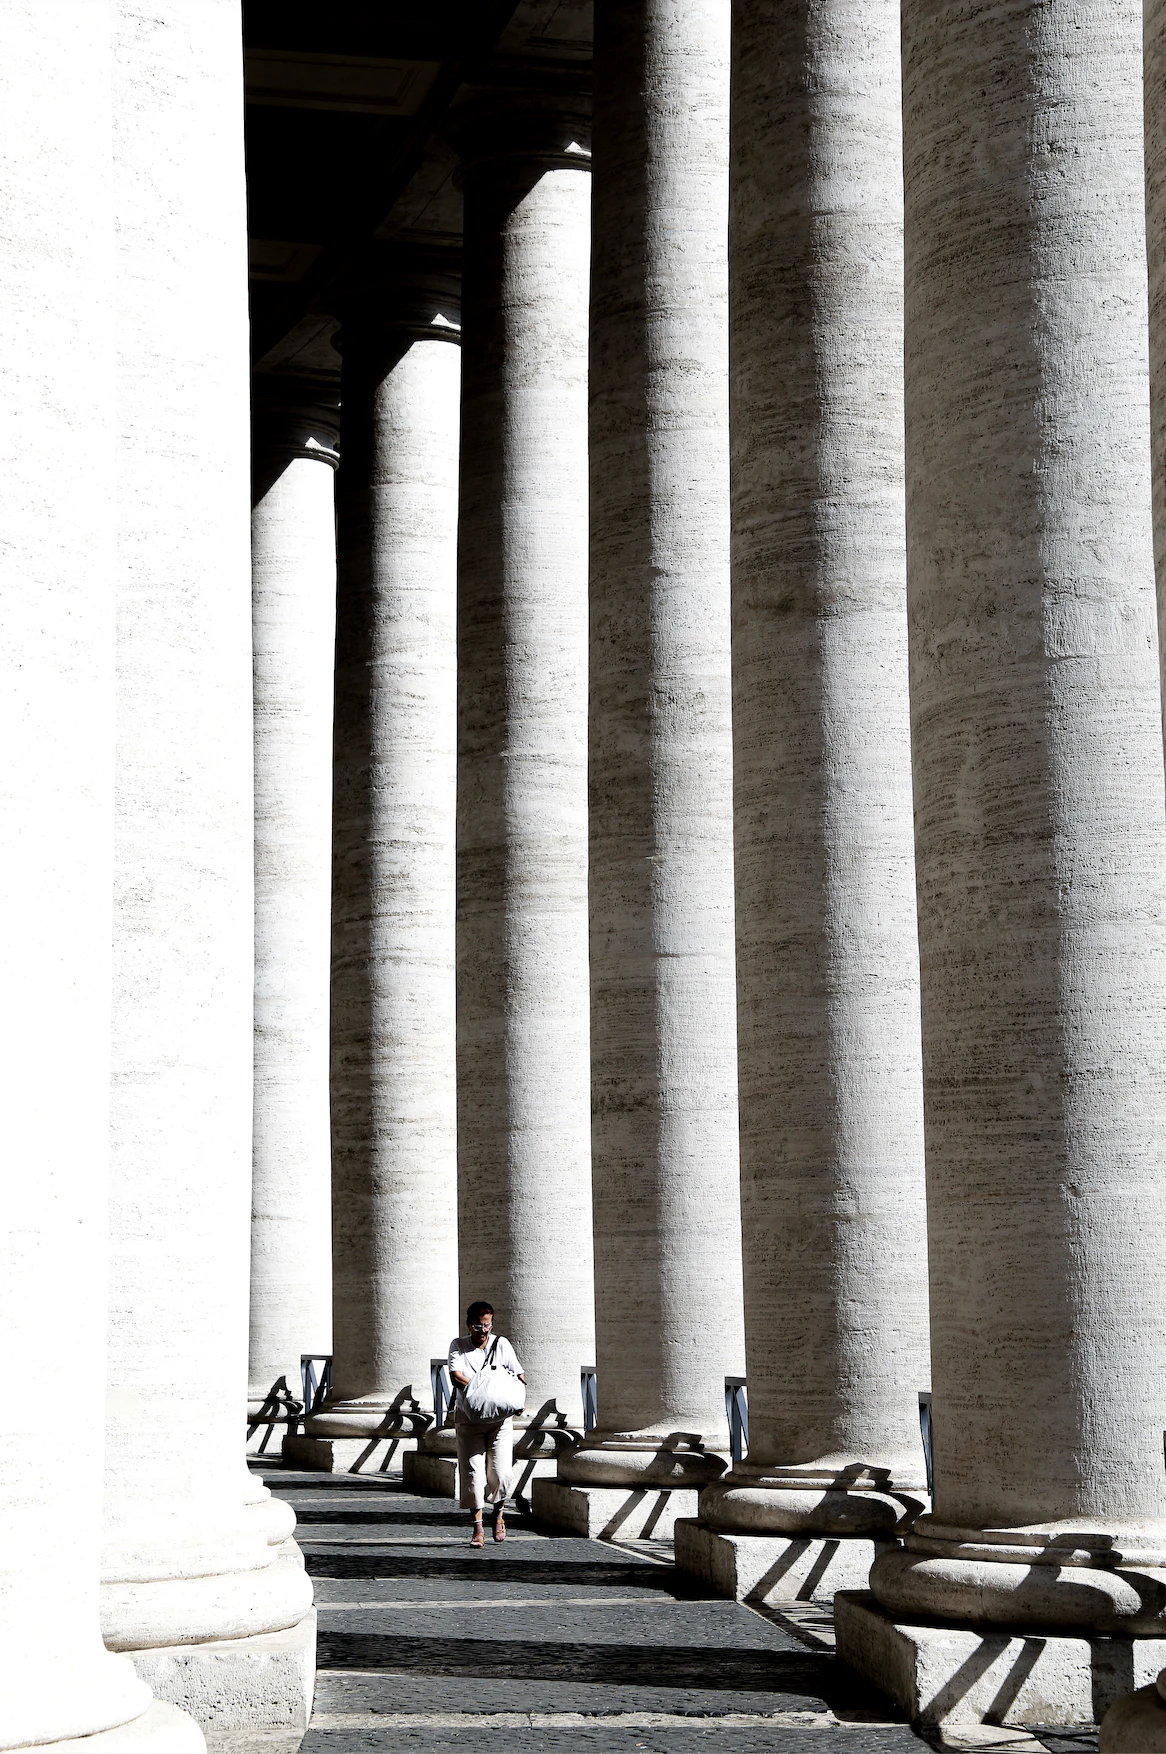 Pillars in sunlight.